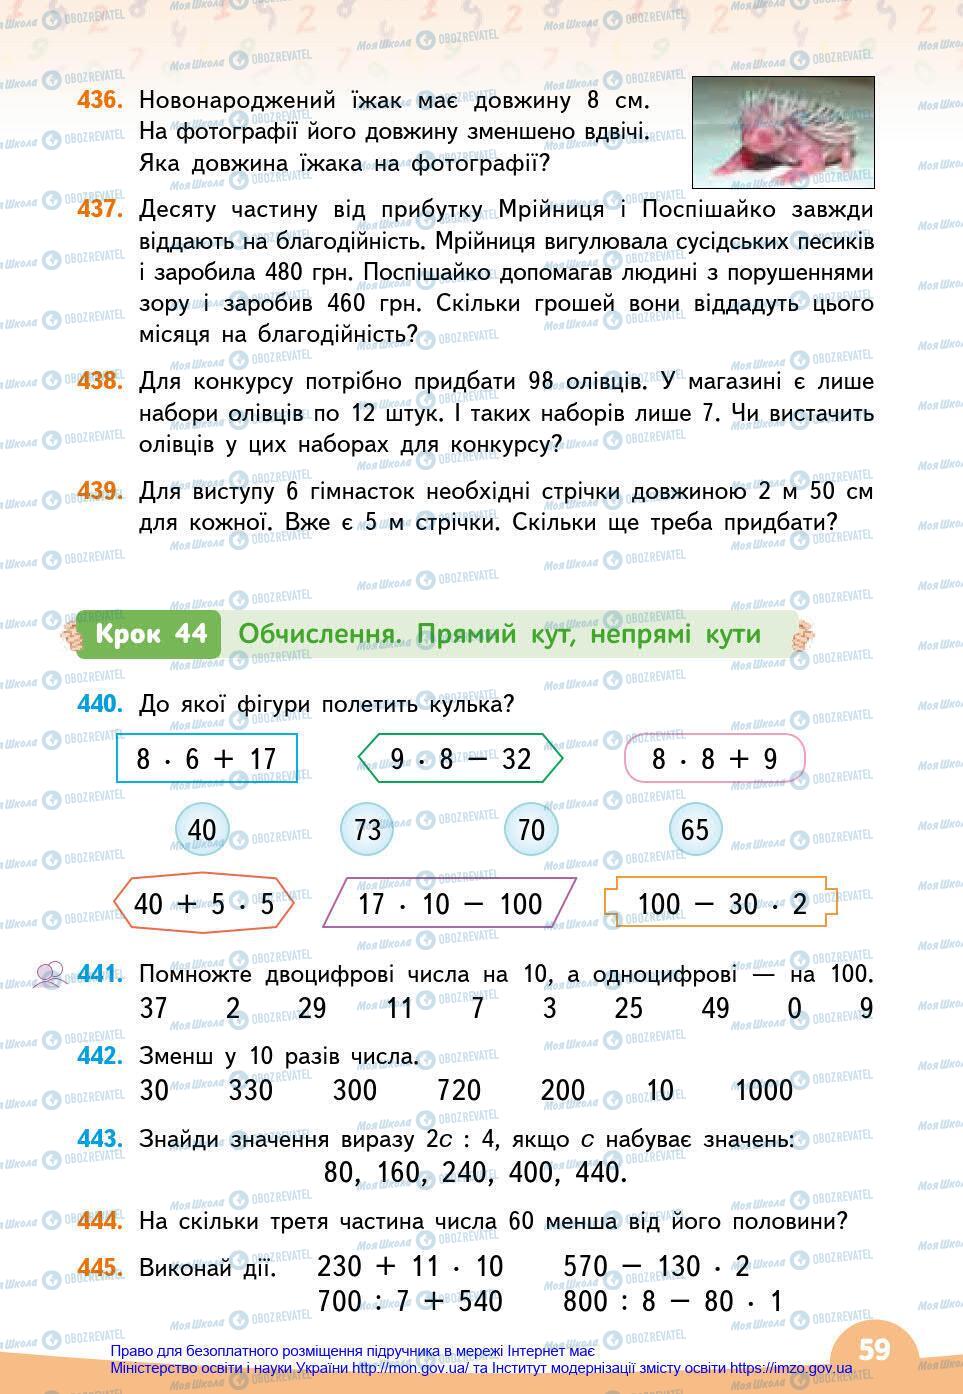 Учебники Математика 3 класс страница 59